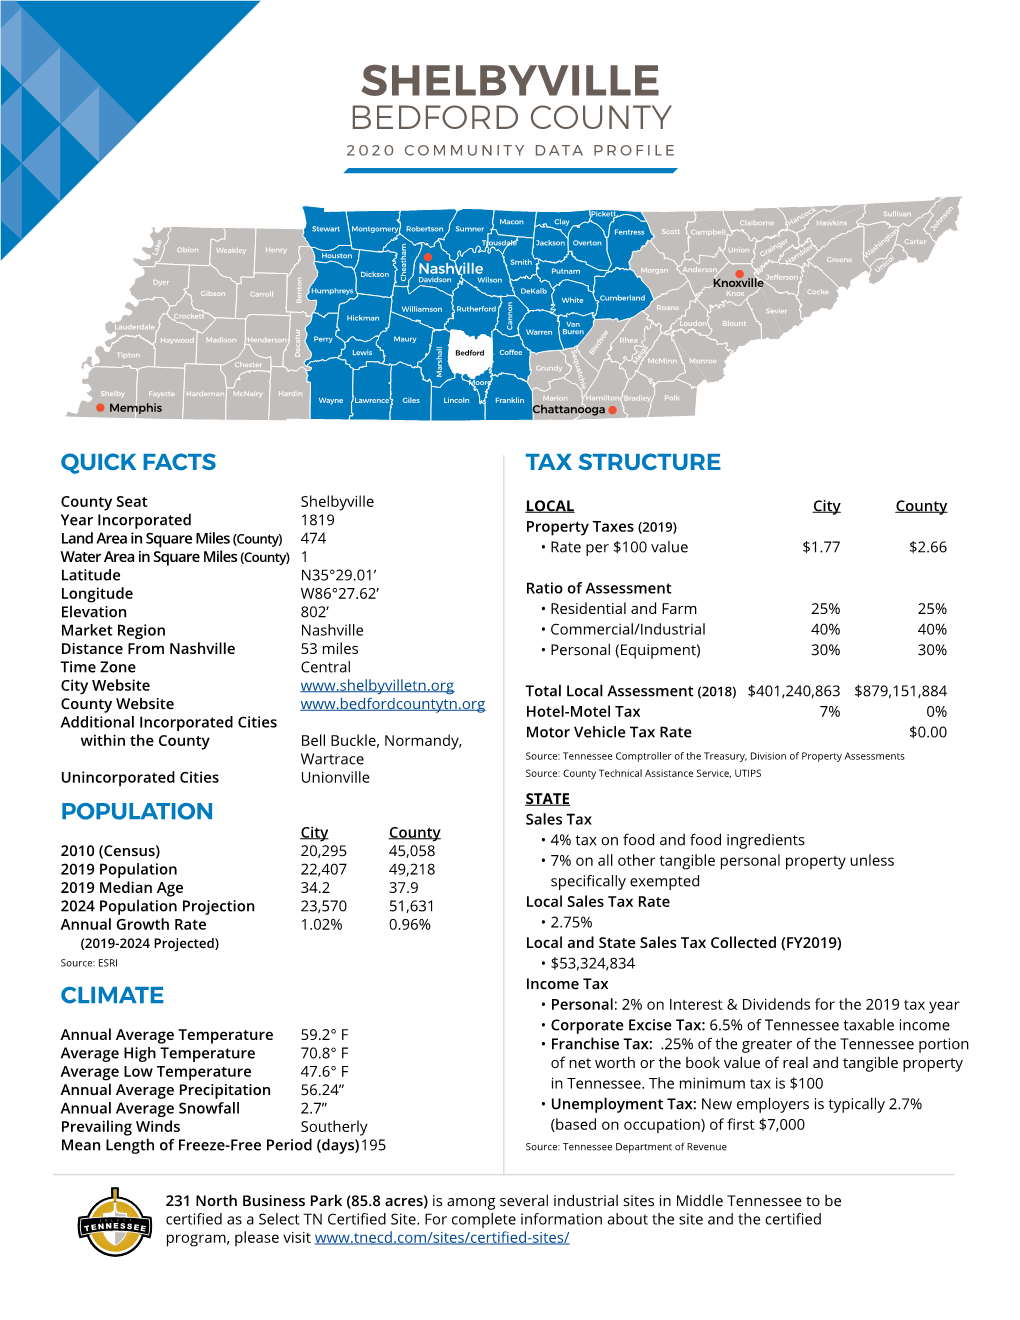 Shelbyville Bedford County 2020 Community Data Profile